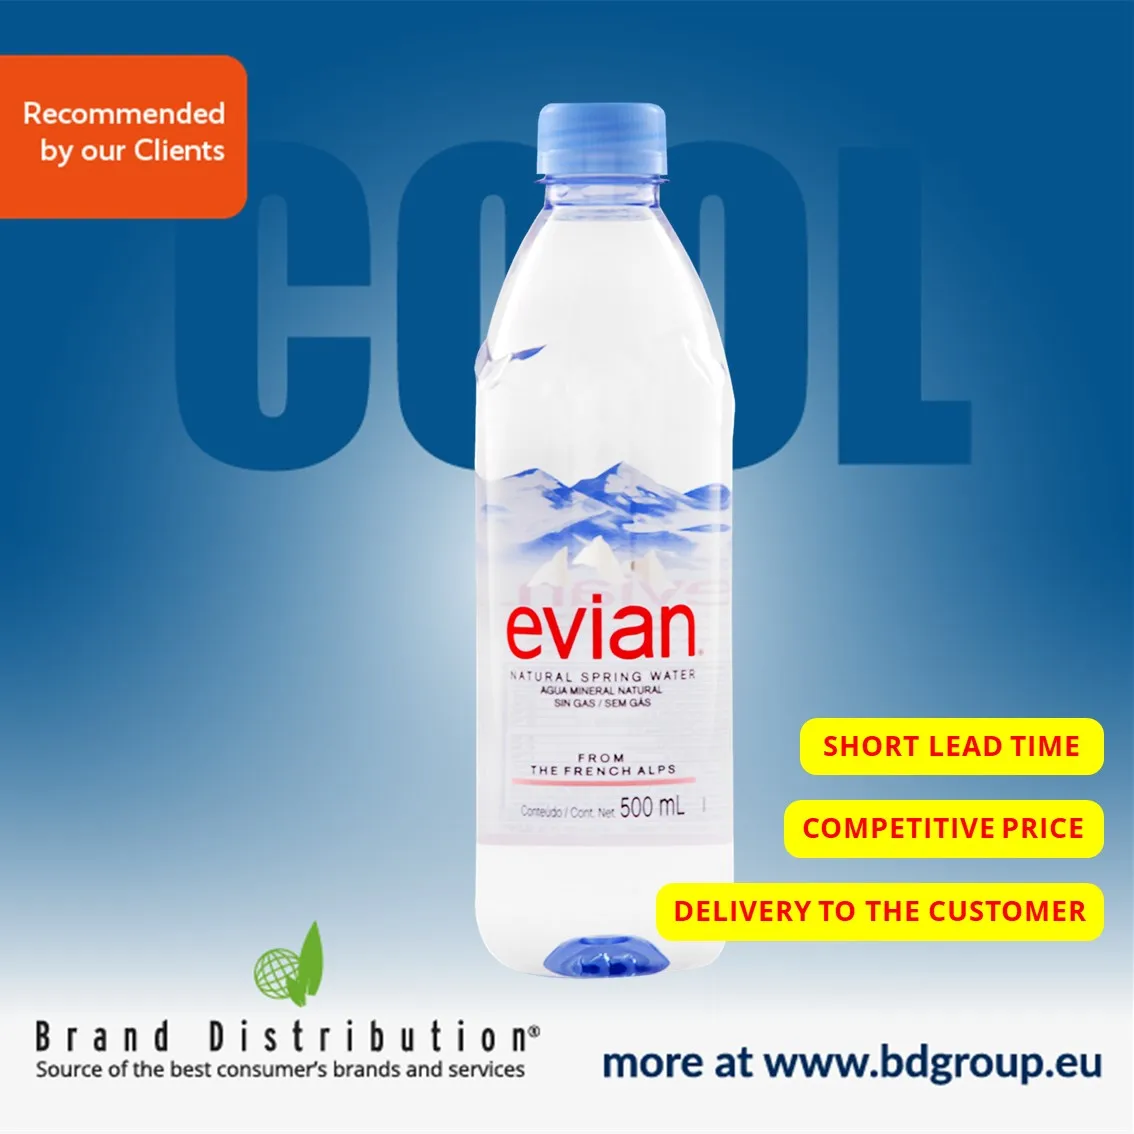 Evian water price